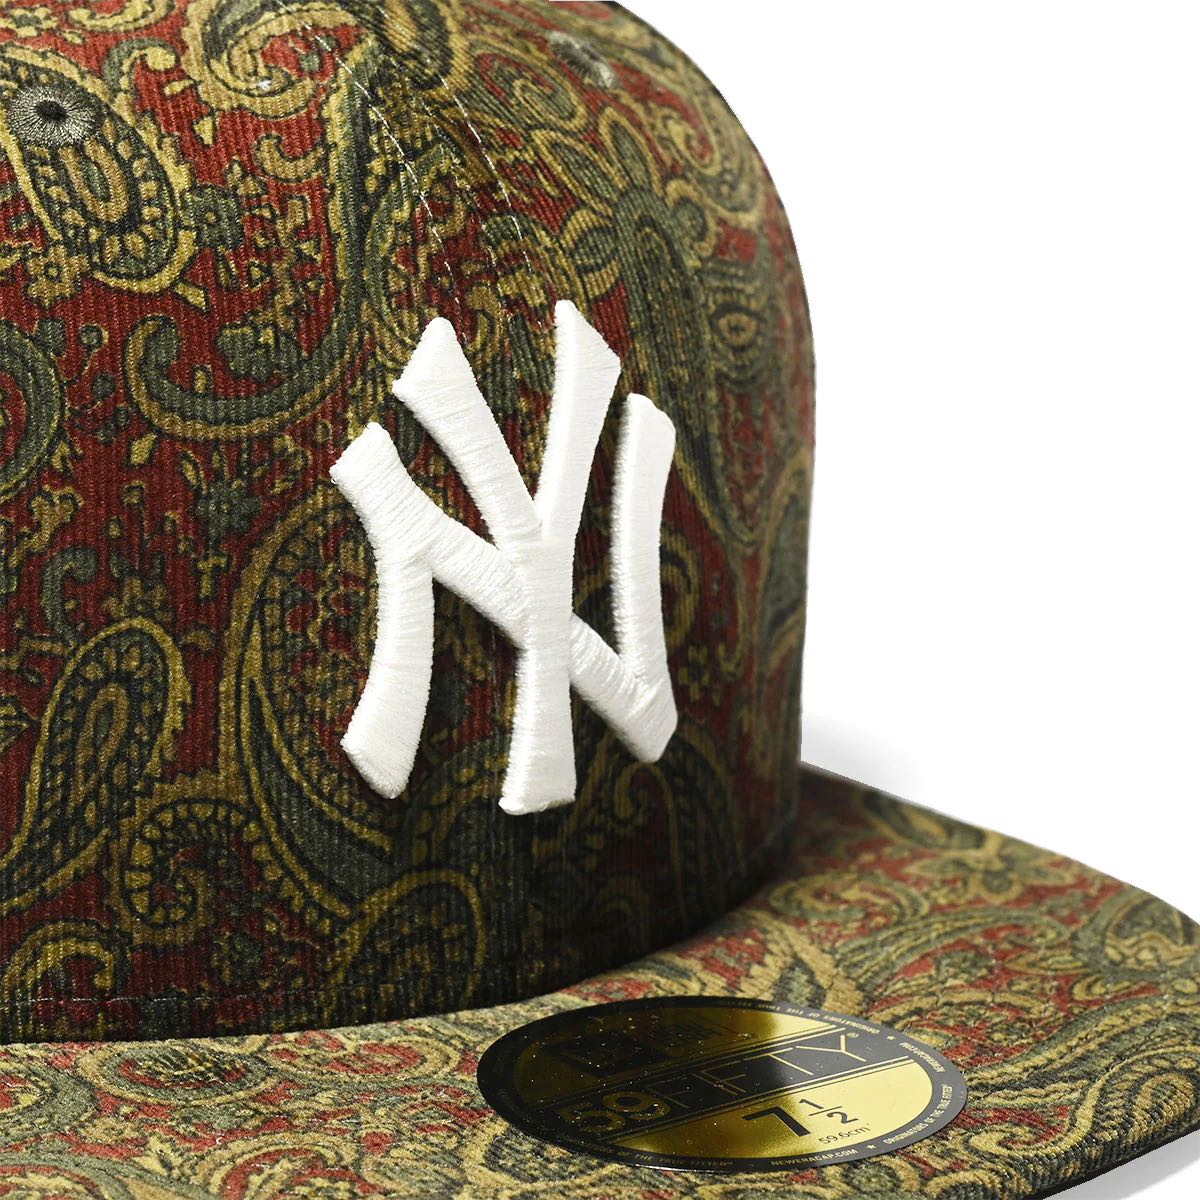 New York Yankees Paisley New Era 59Fifty Hat